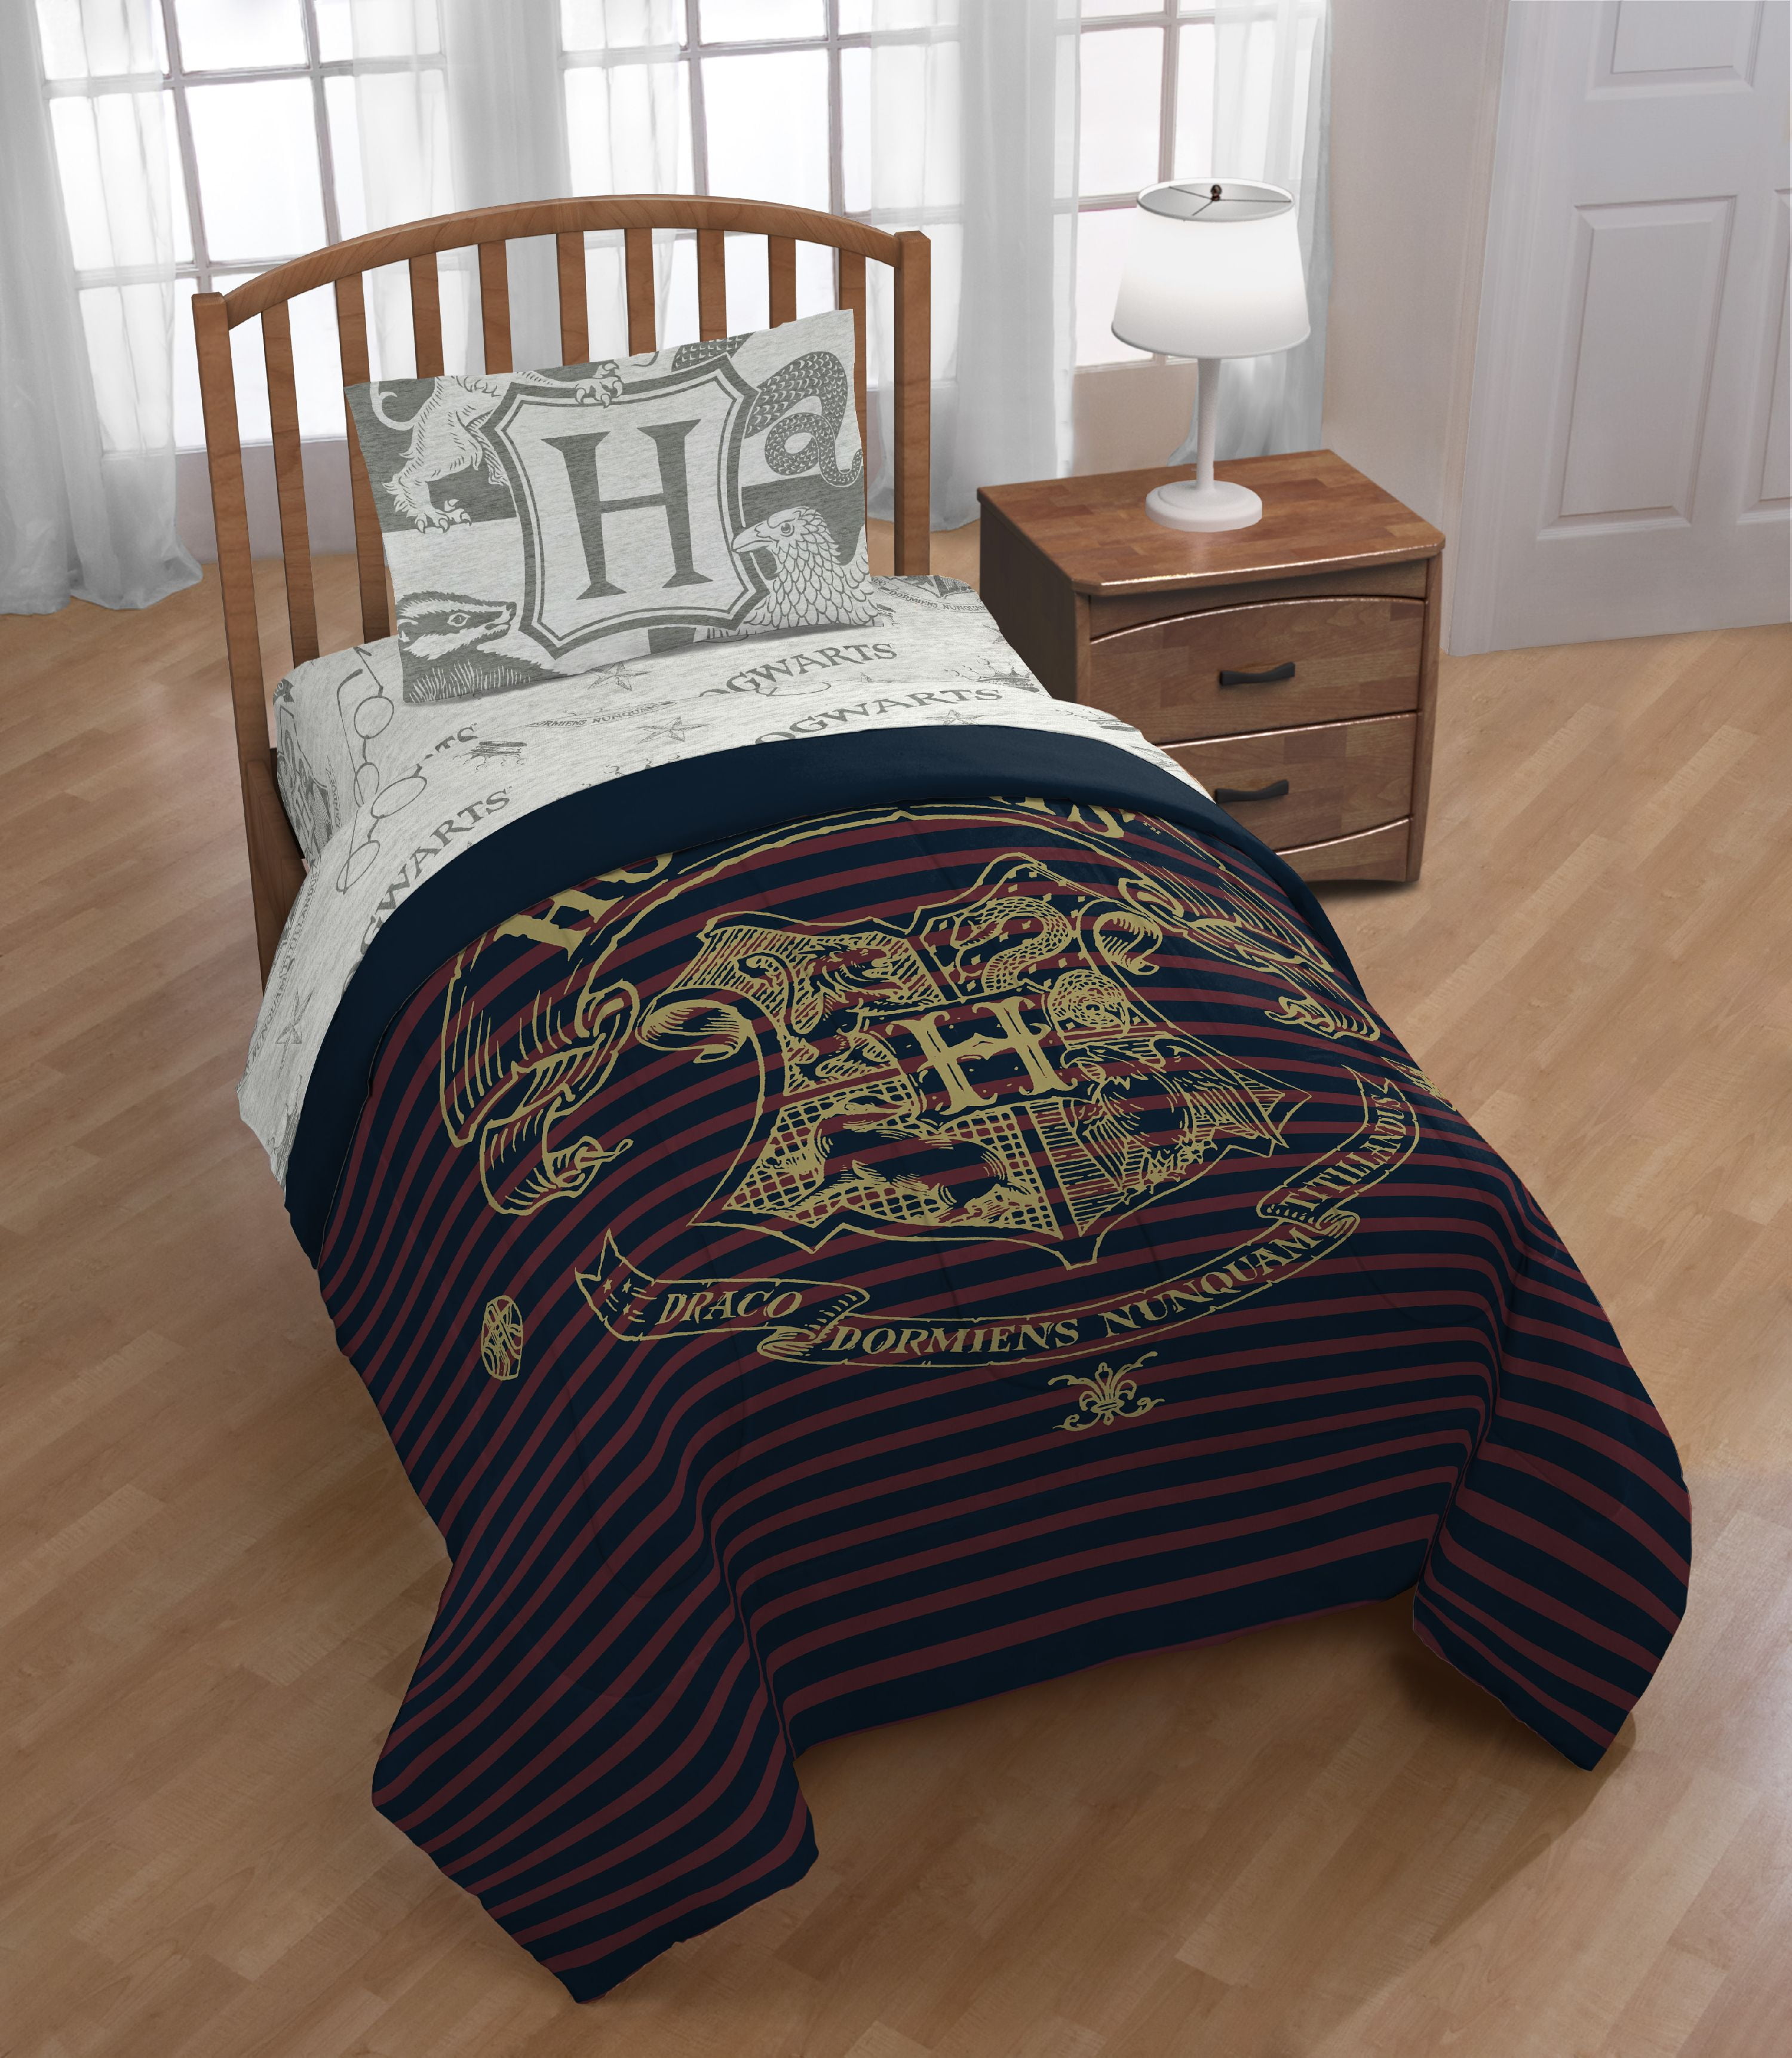 Comforter Harry Potter 4 Pc Toddler Bed Set Flat Sheet Fitted Sheet Pillow 